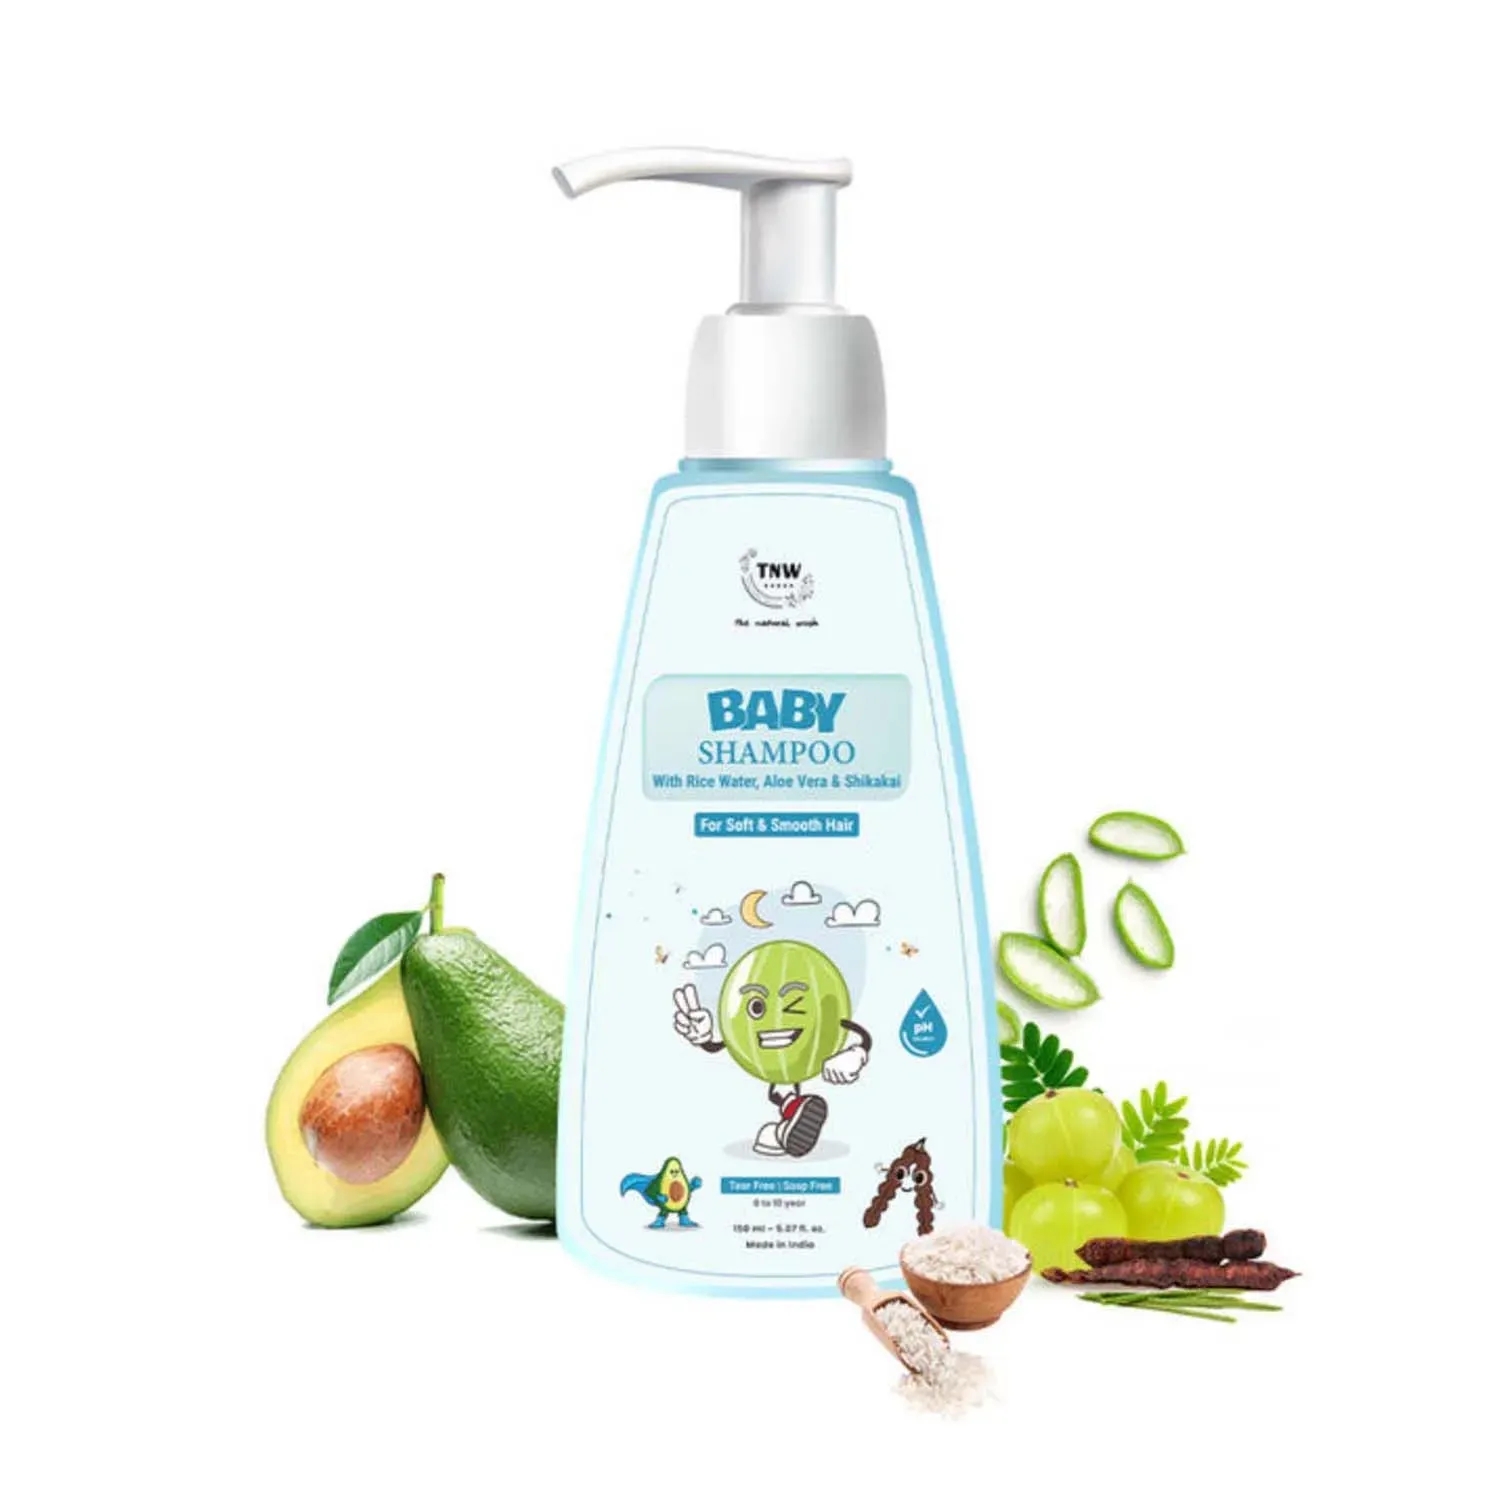 TNW The Natural Wash | TNW The Natural Wash Baby Shampoo (150ml)